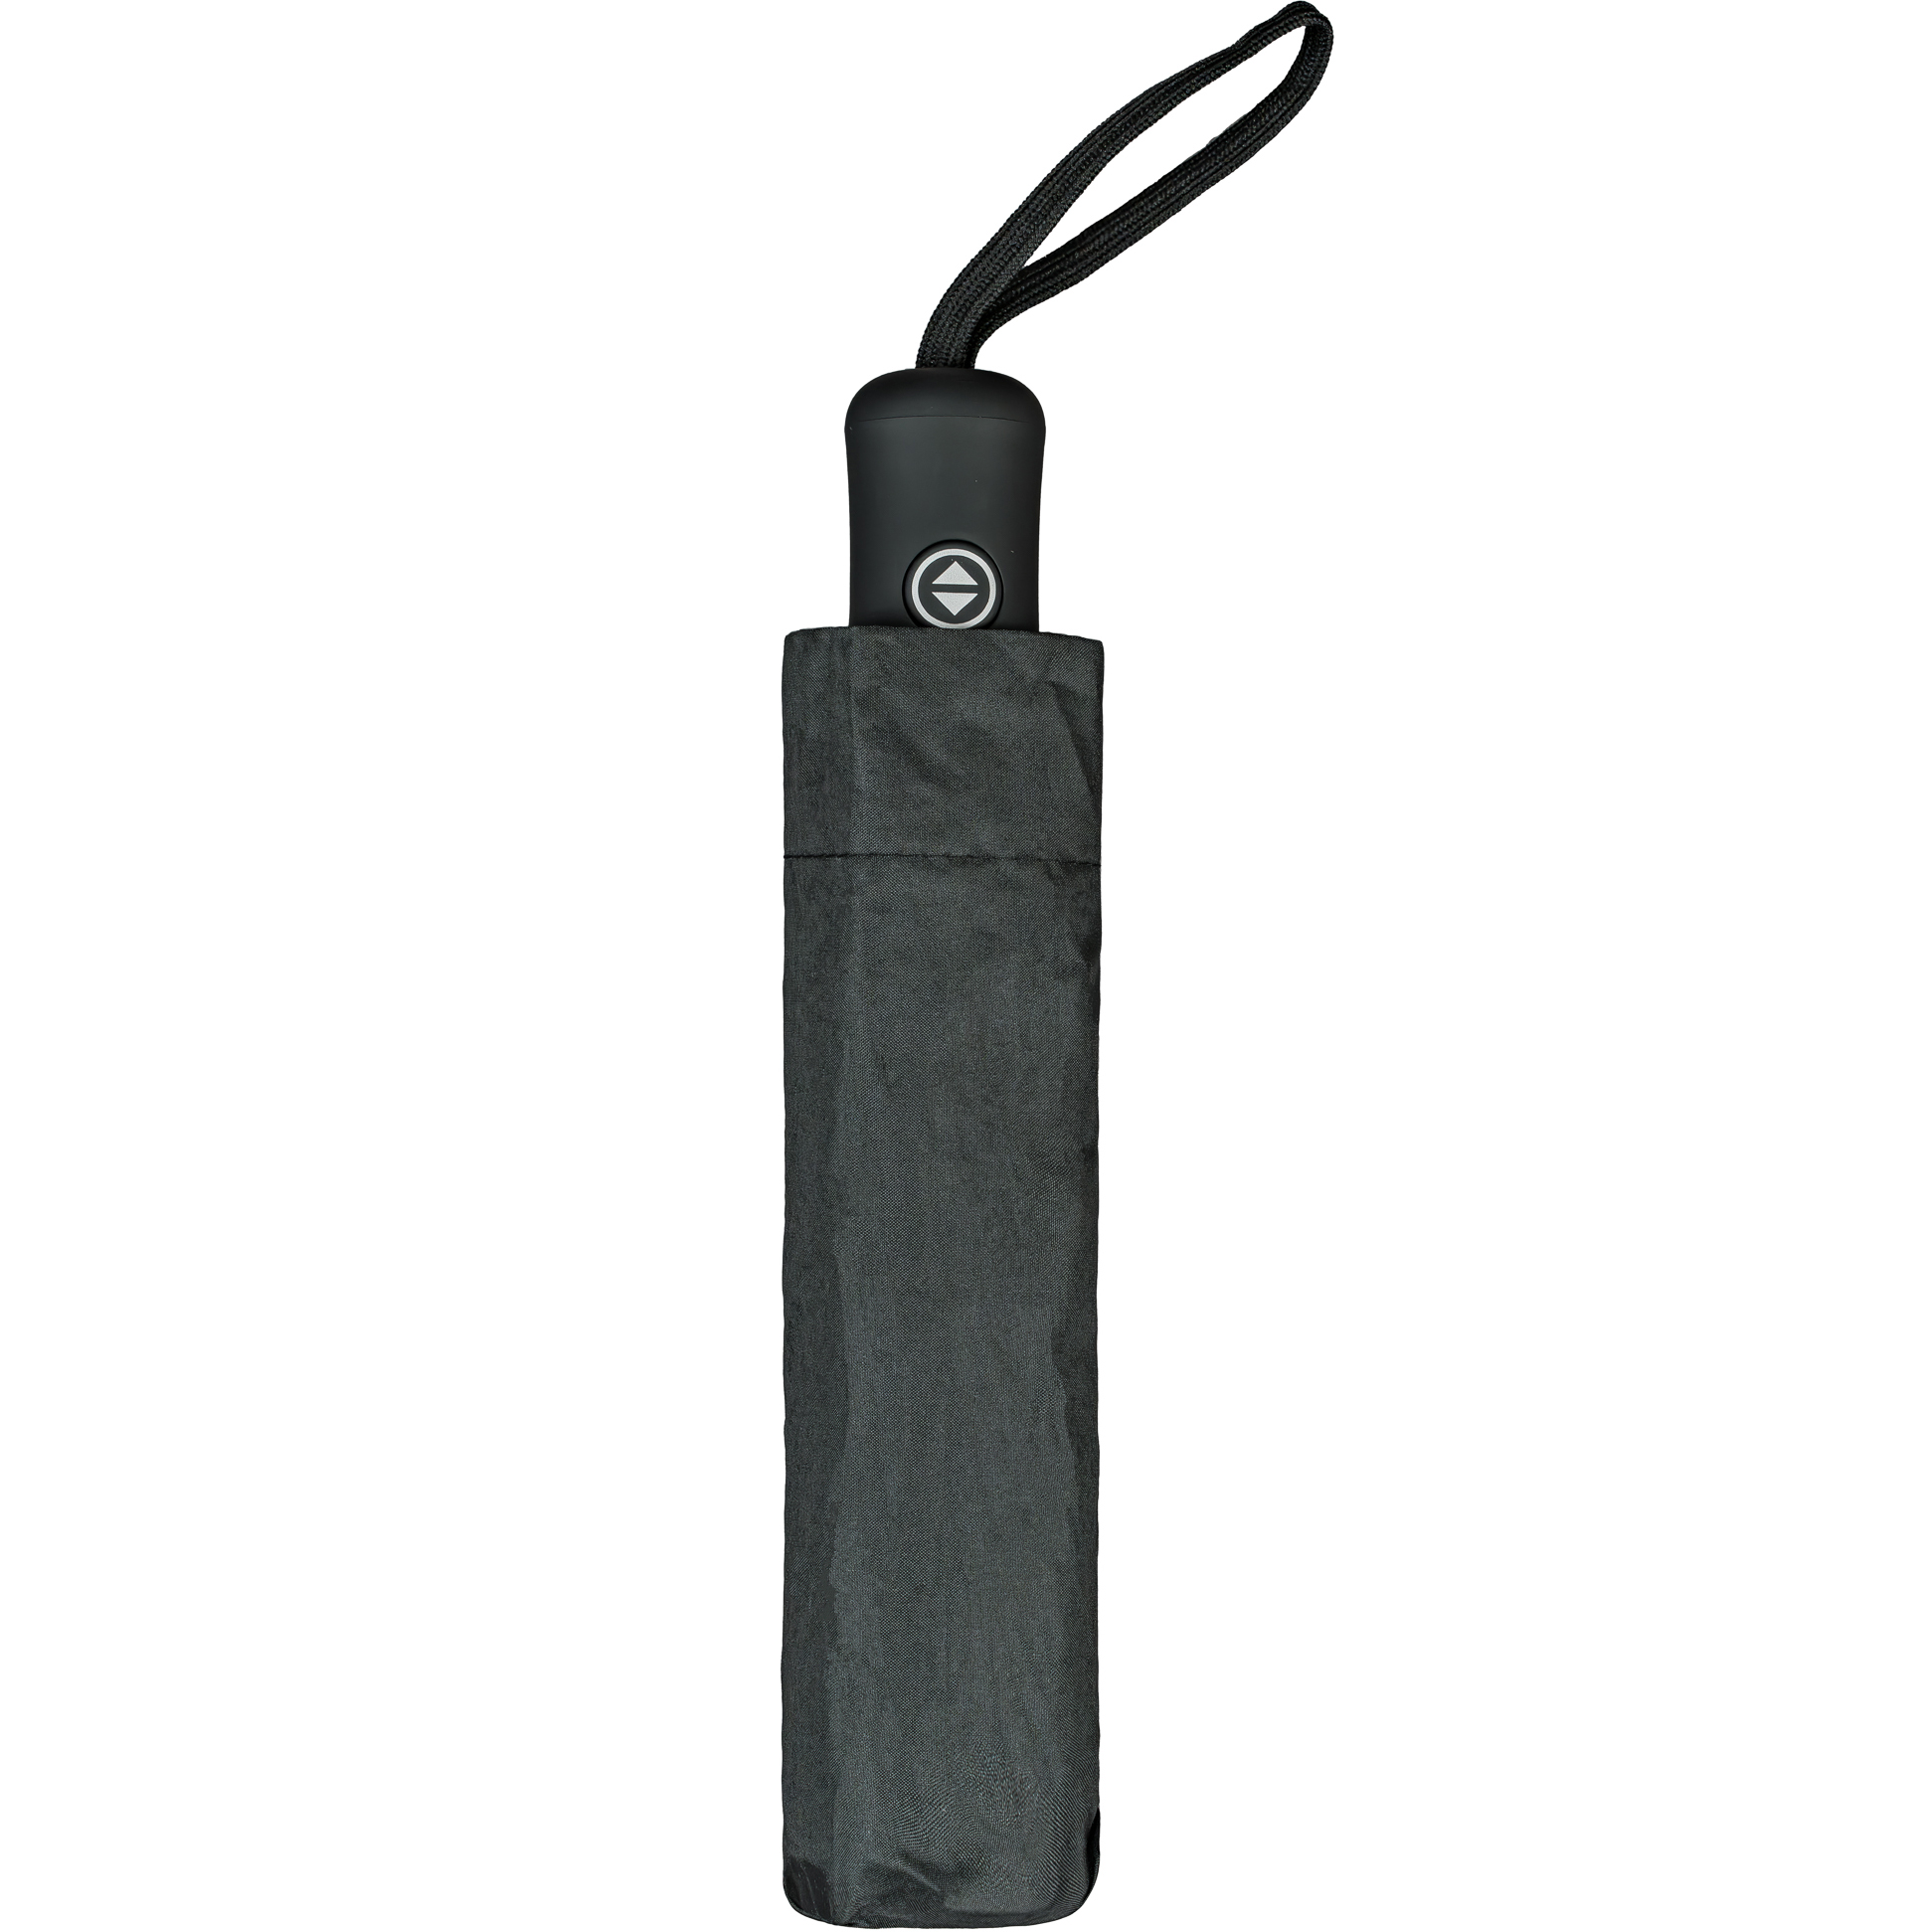 The Commuter - Wind resistant black umbrella Automatic Open and Close Umbrella (3411)